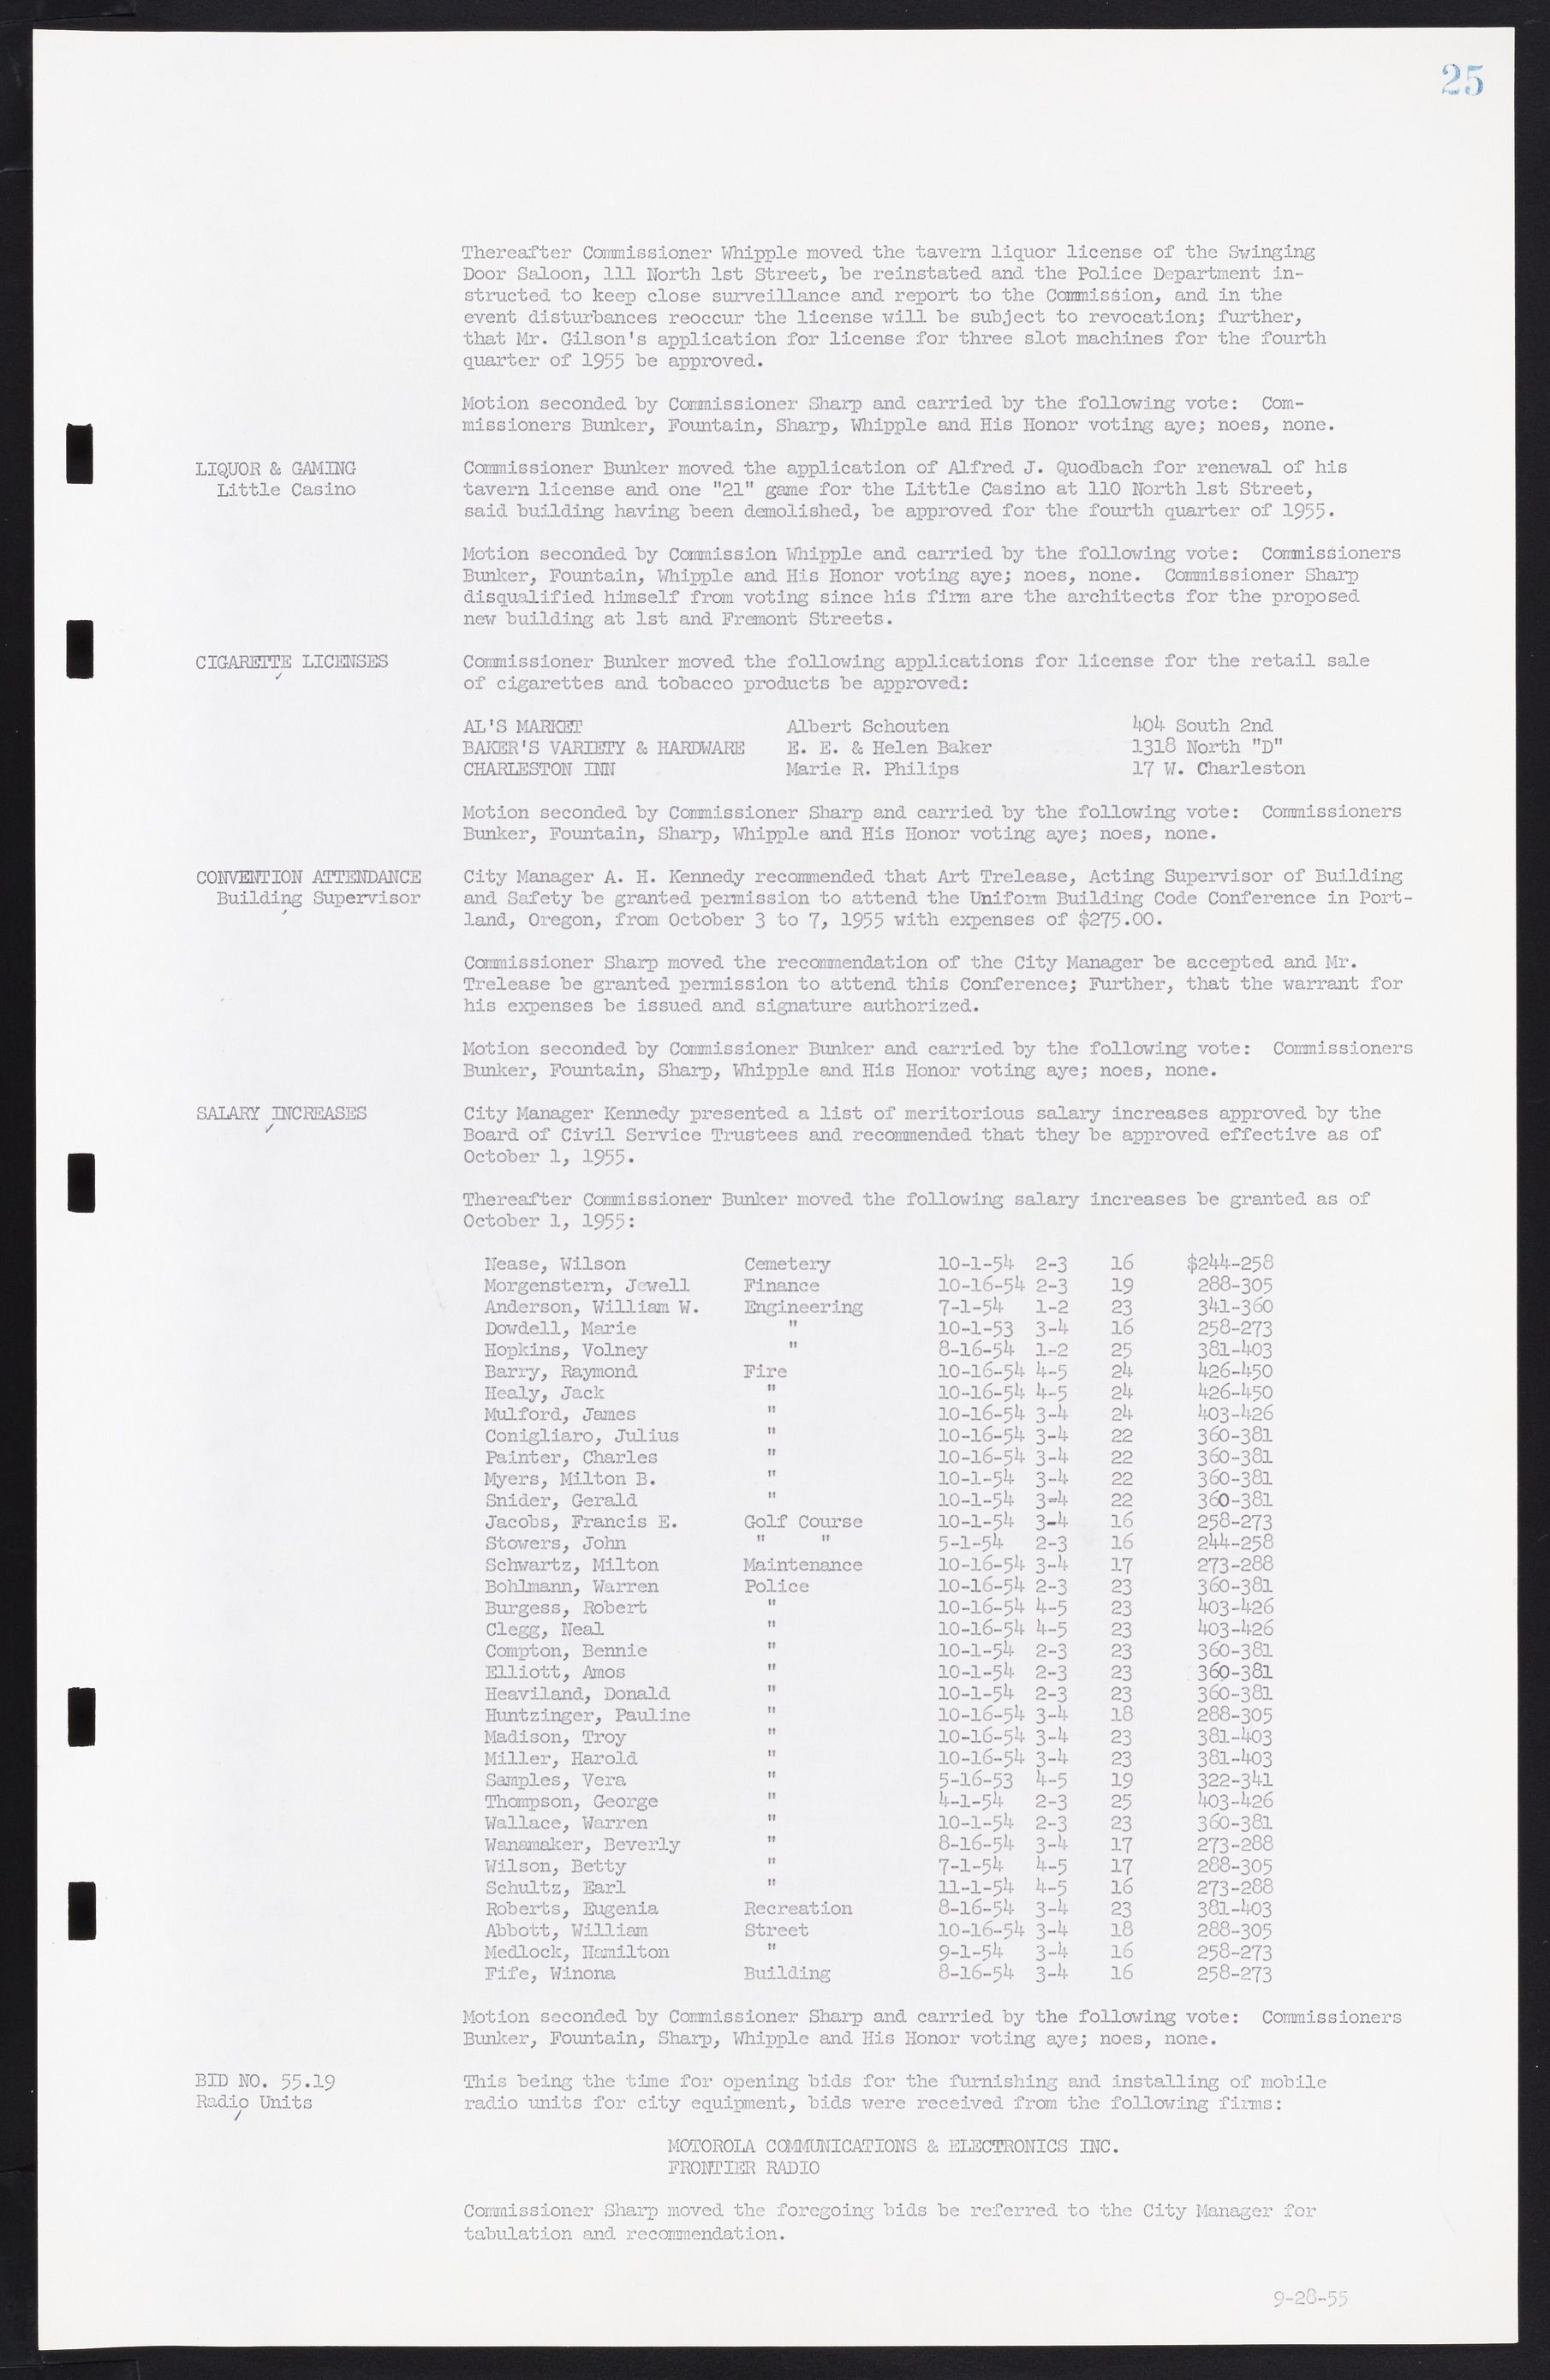 Las Vegas City Commission Minutes, September 21, 1955 to November 20, 1957, lvc000010-31